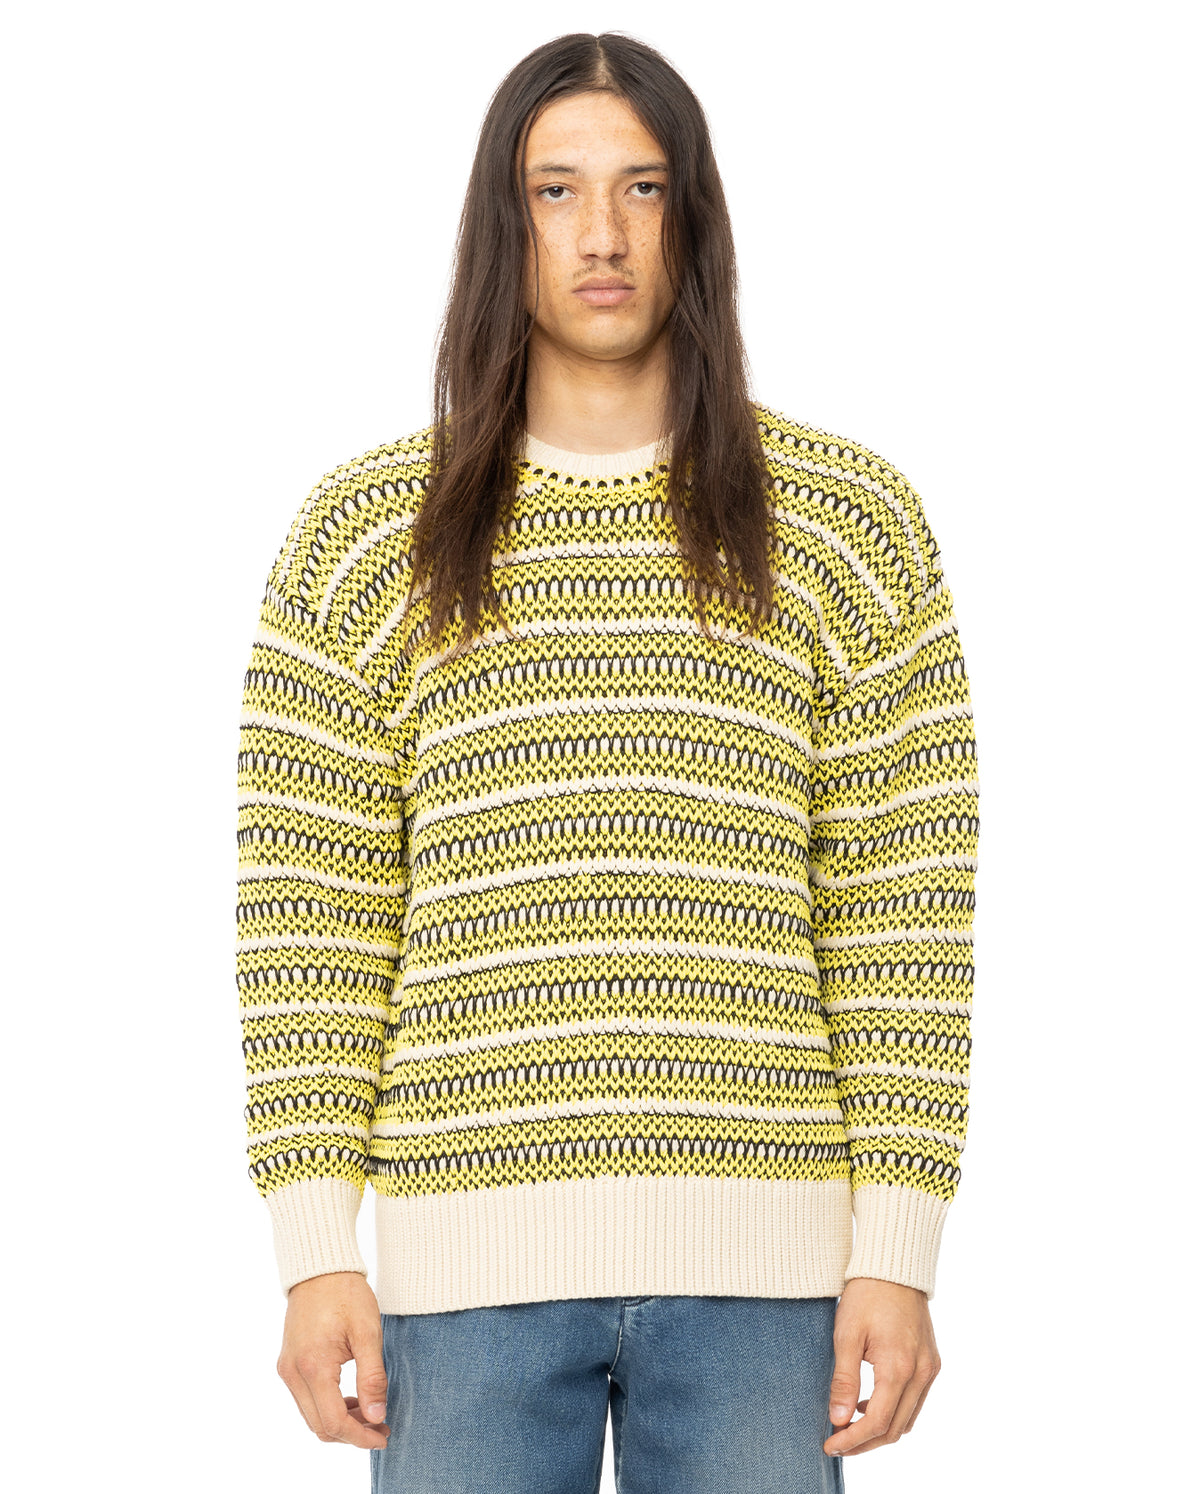 Hank Techno Summer Knit Crew Sweater - Yellow